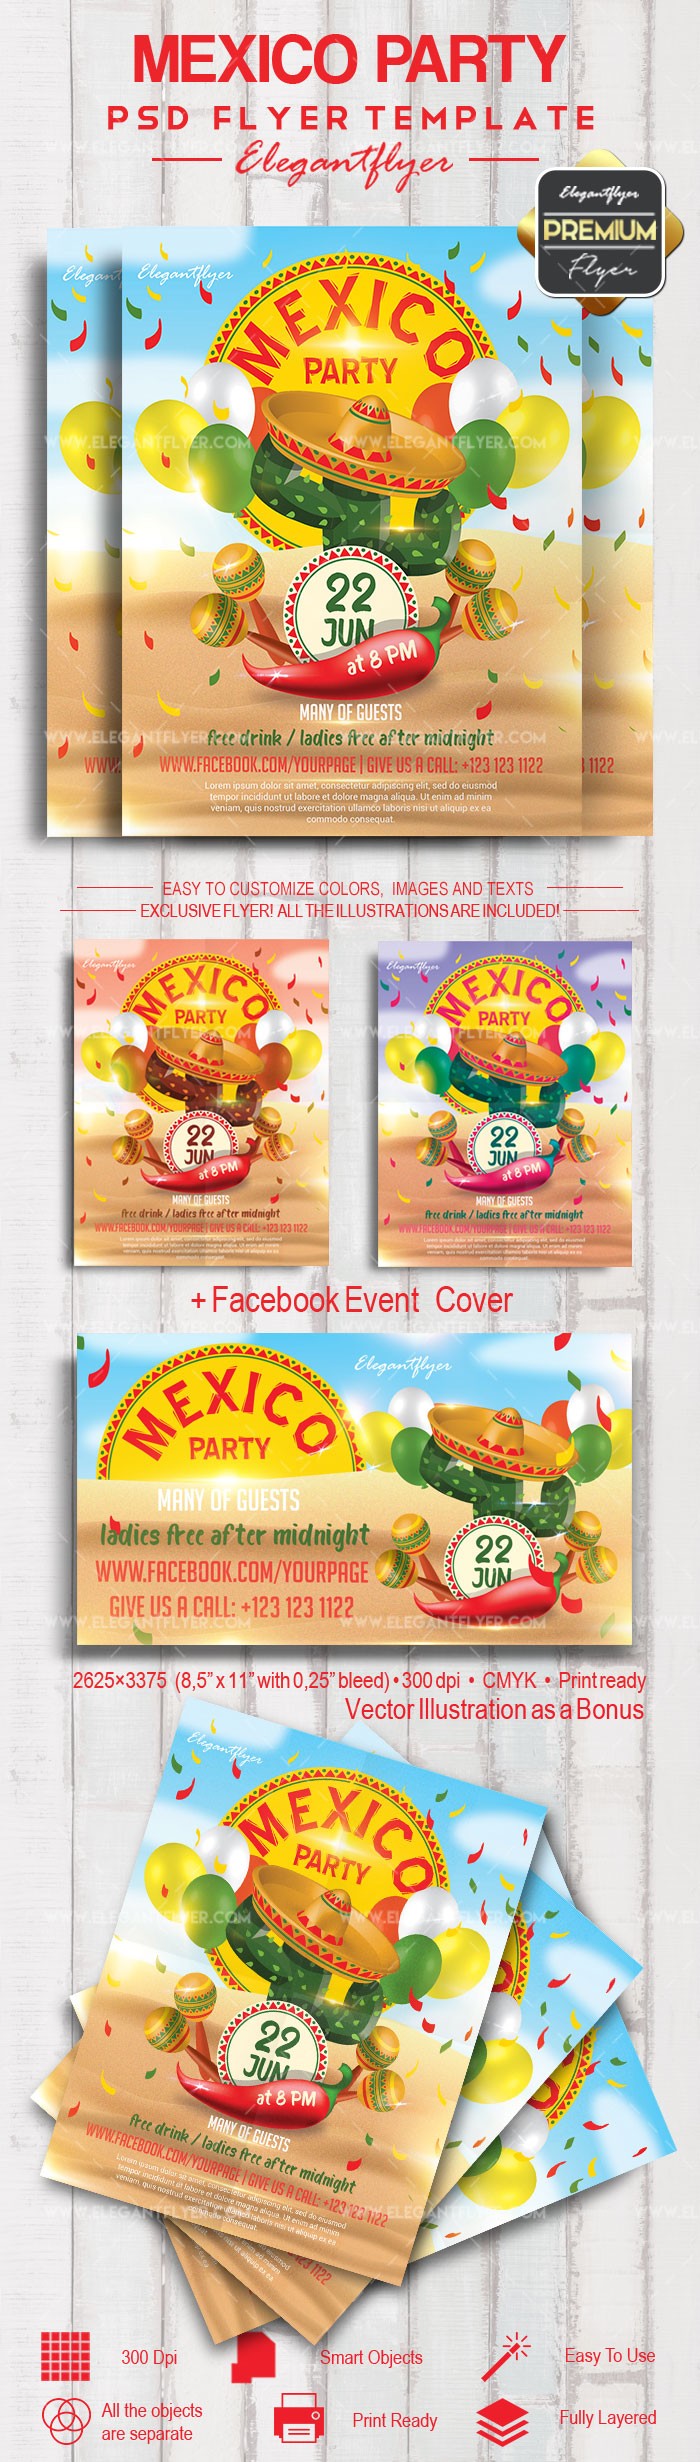 Mexiko Party Event by ElegantFlyer